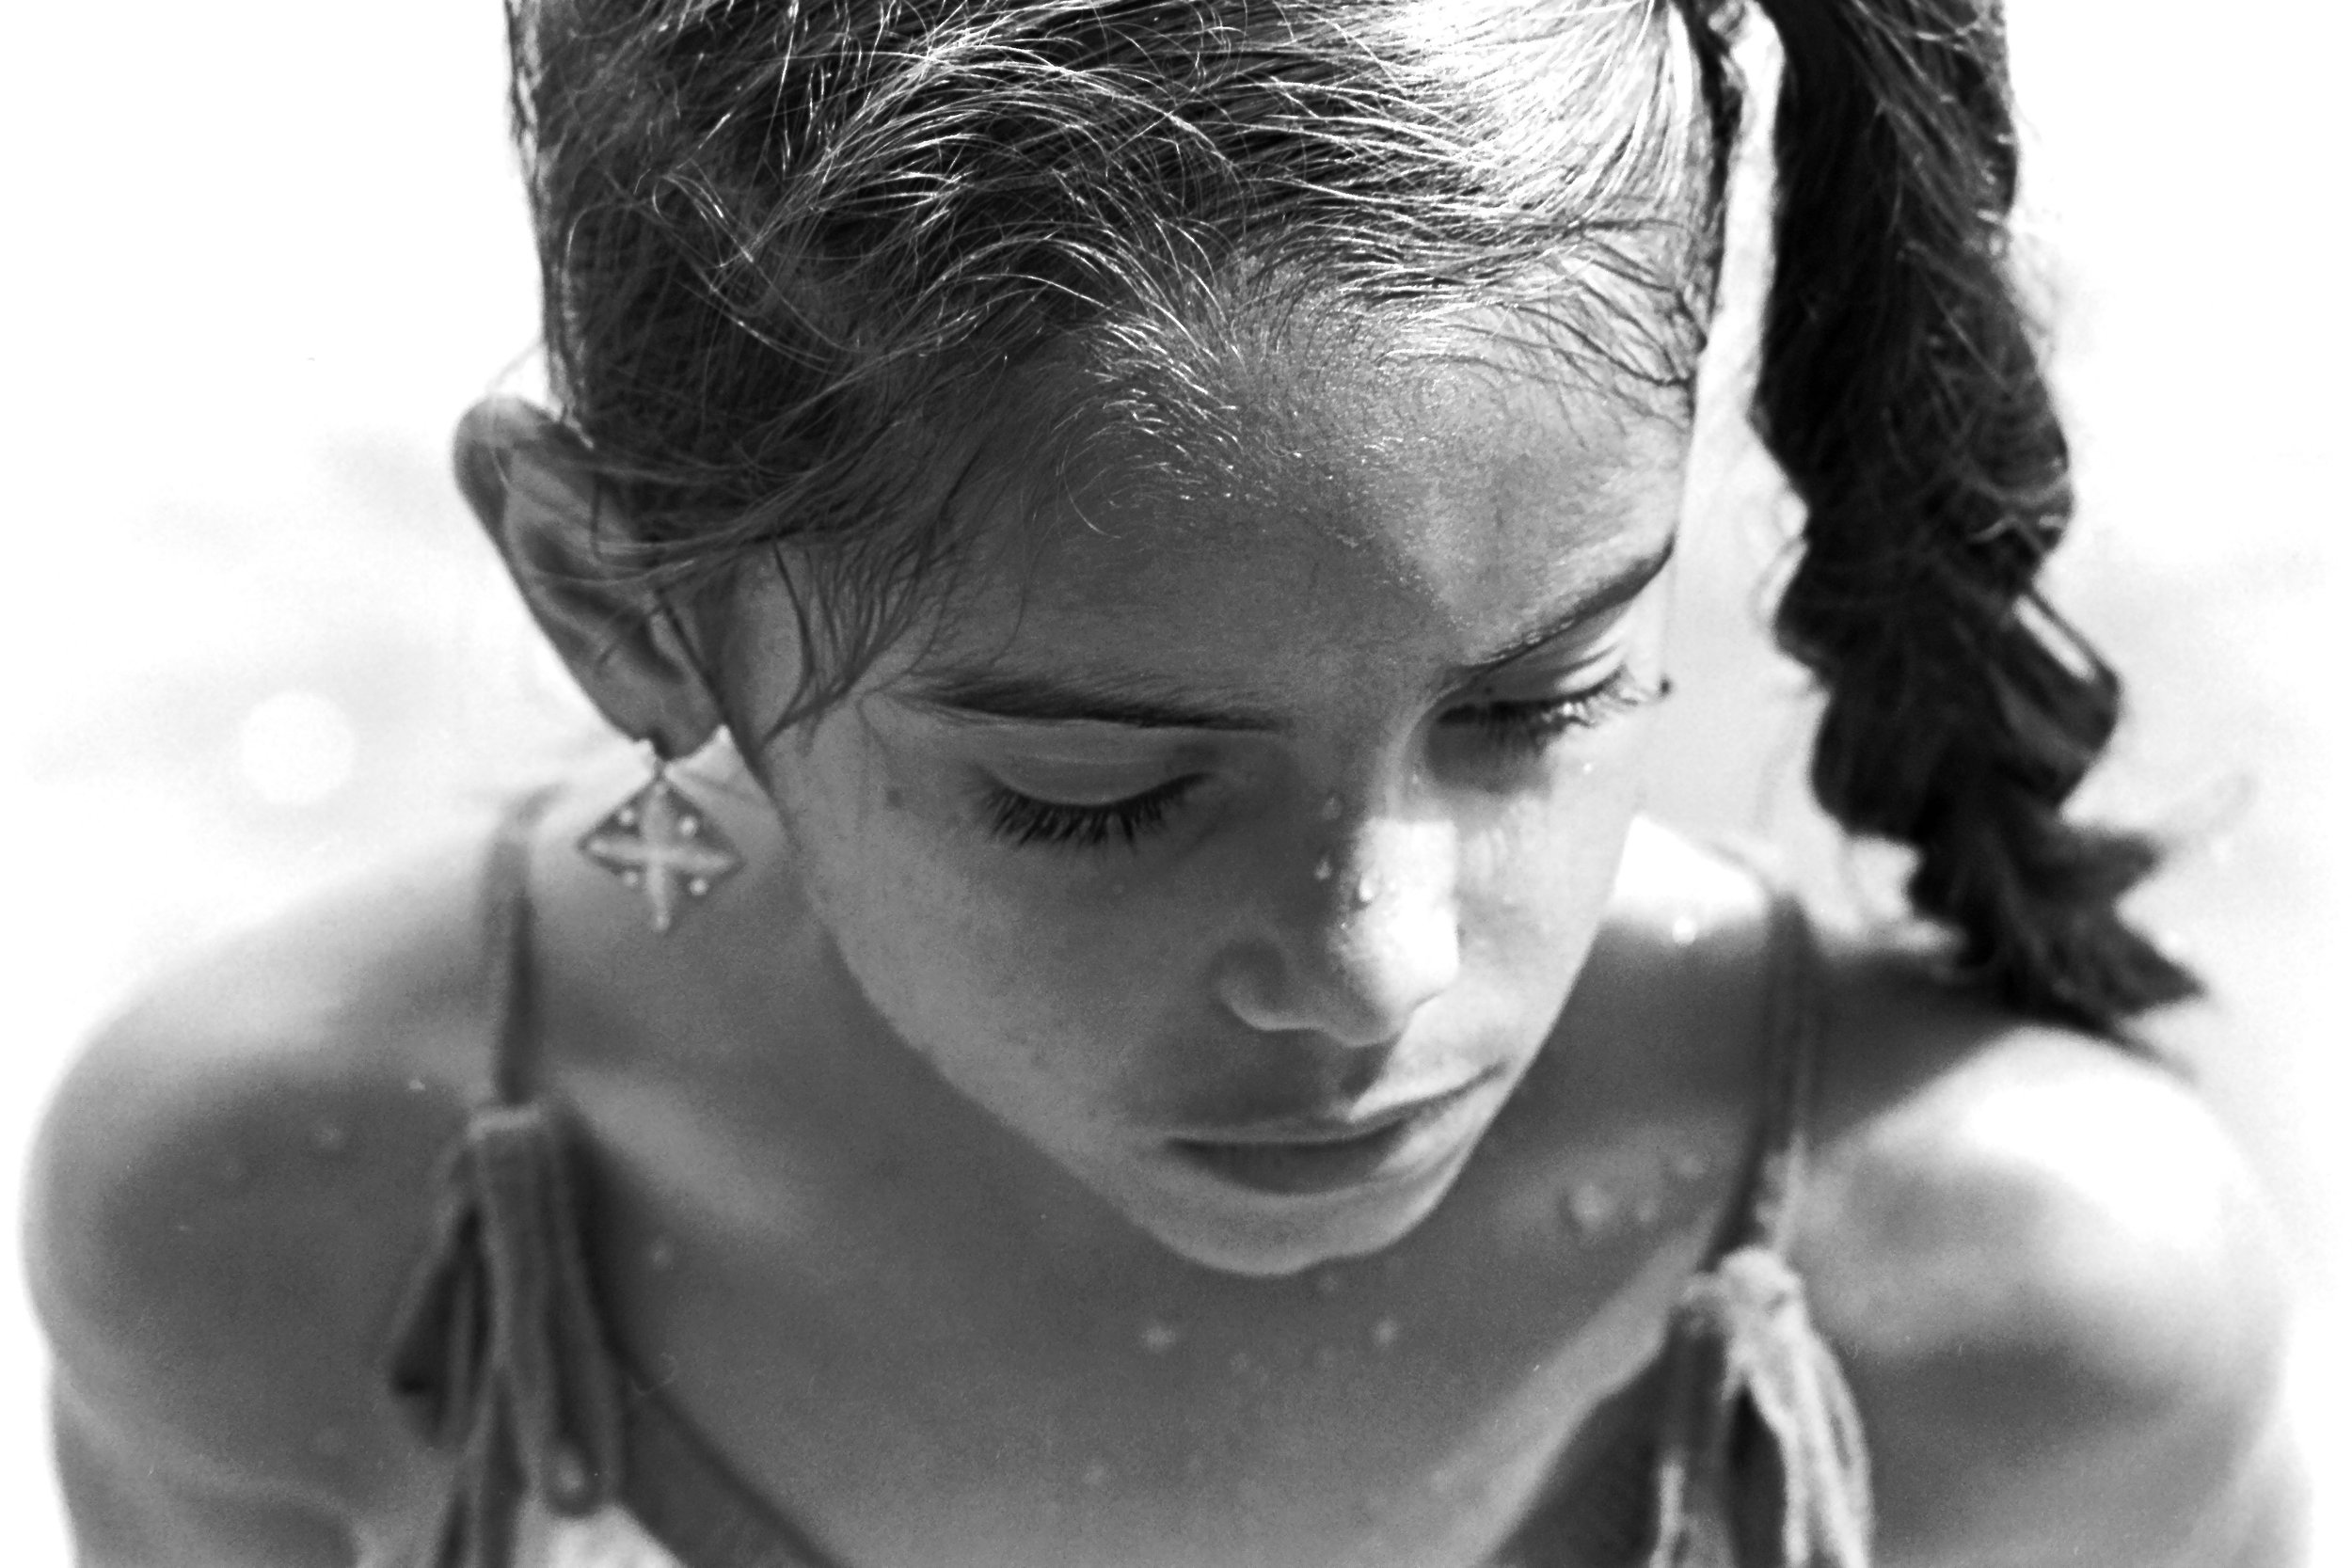 Girl closeup with wet face.JPG